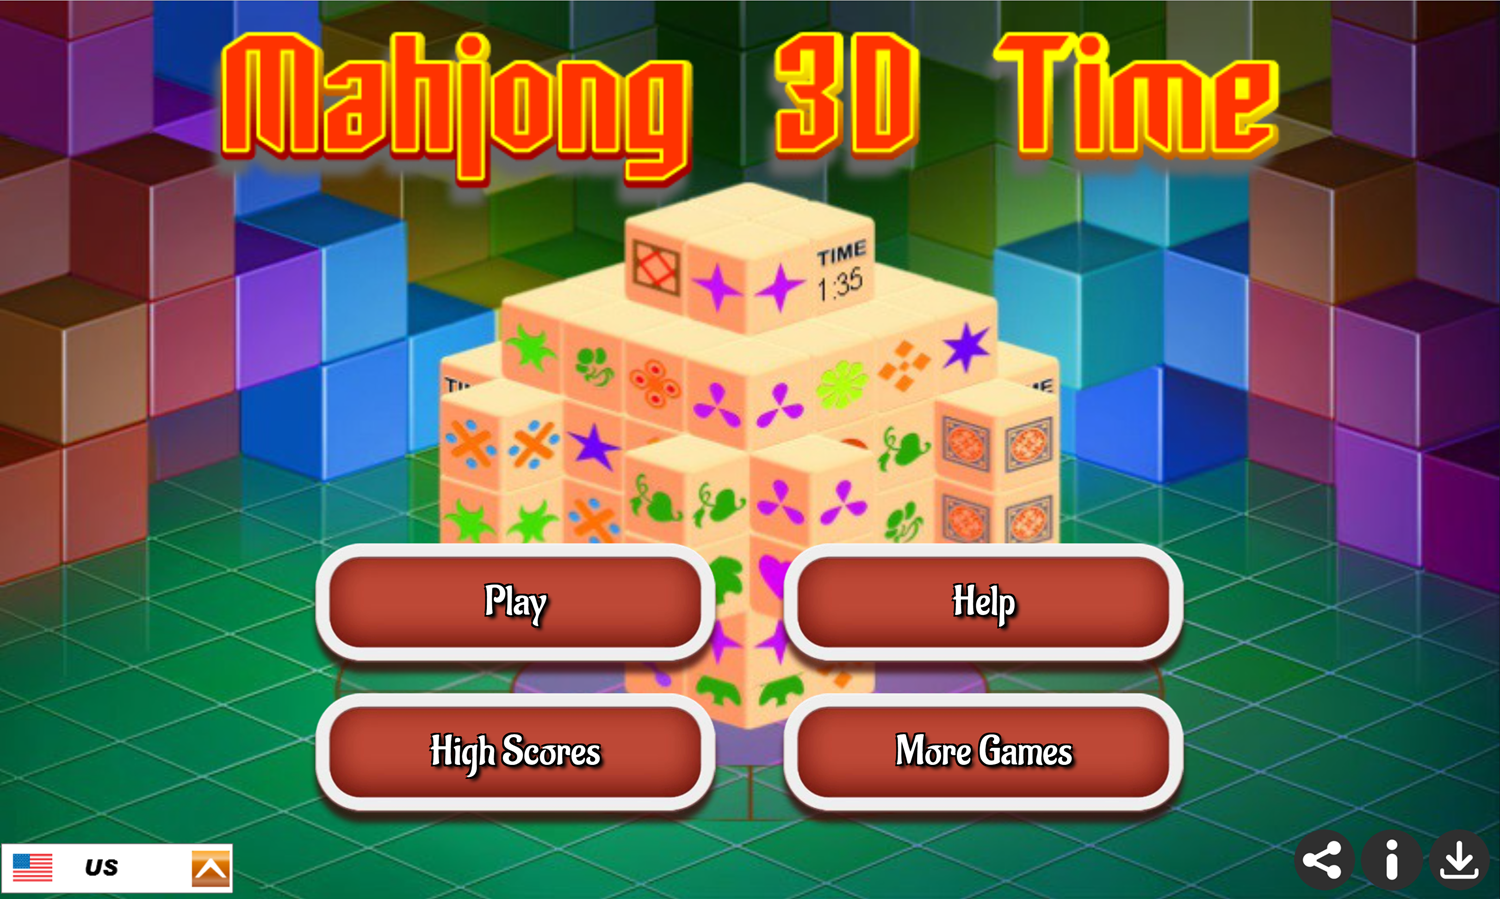 Mahjong 3D Time Game Welcome Screen Screenshot.